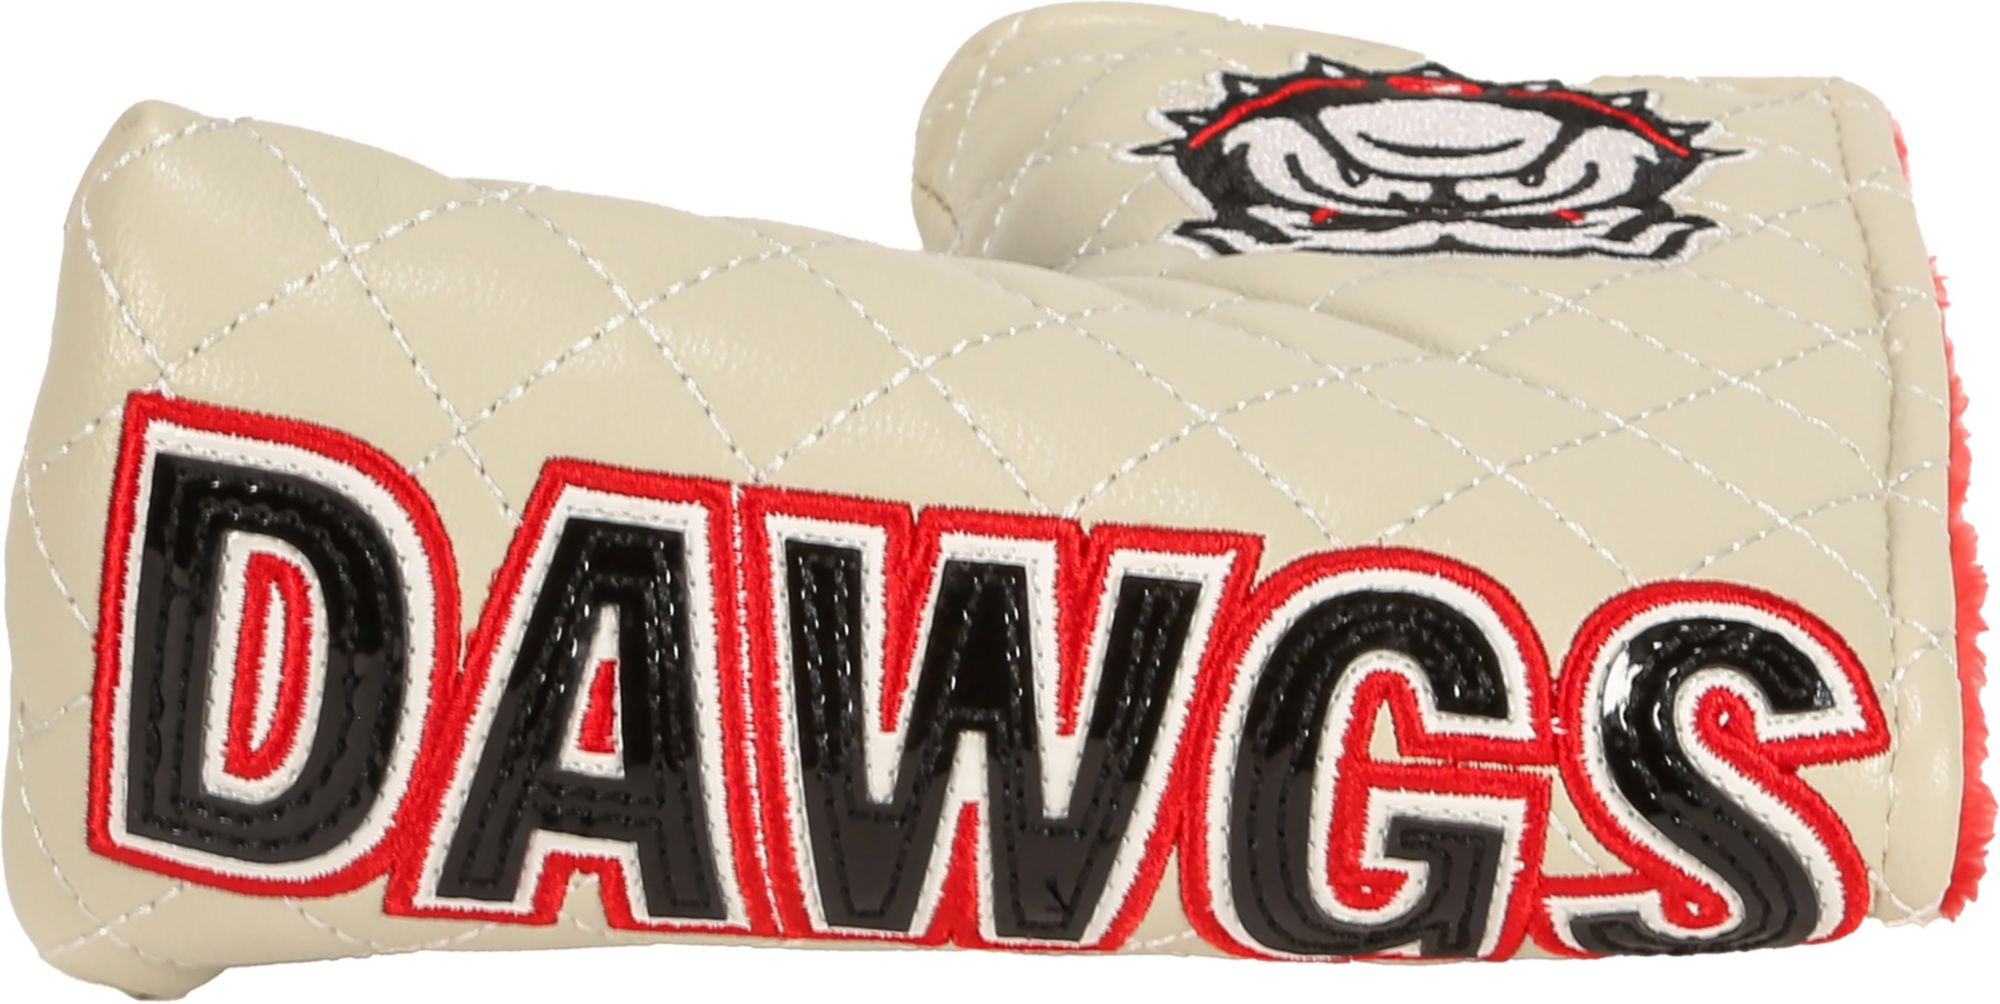 CMC Design Georgia Bulldogs Blade Putter Headcover